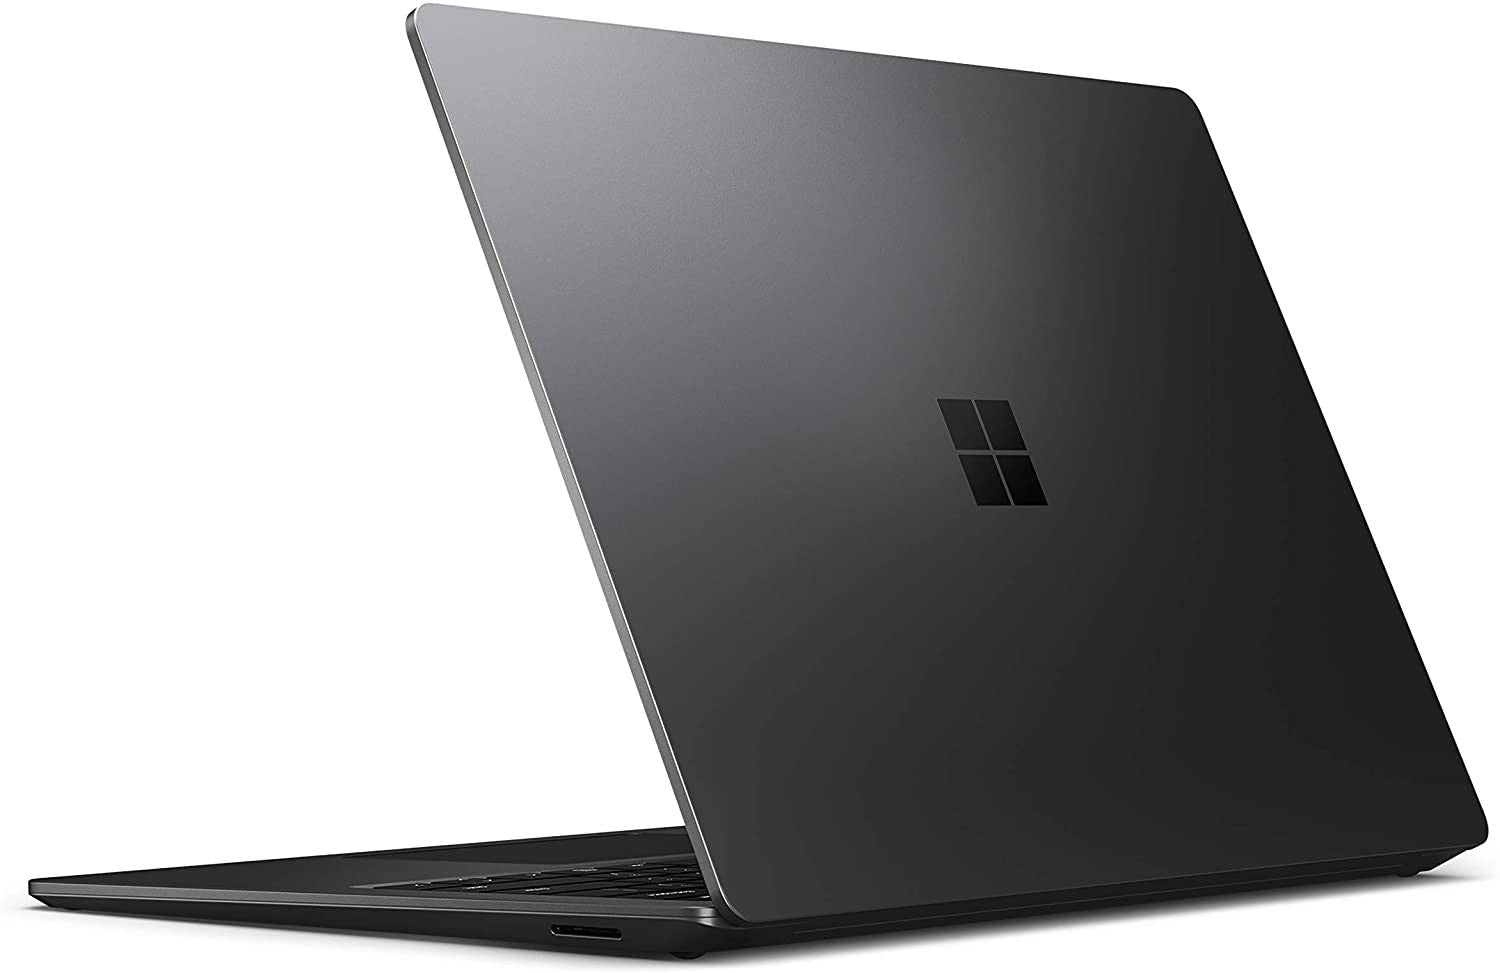 Microsoft Surface Laptop 4 13.5" i7-1185G7 512GB 16GB RAM - Windows 11 - Very Good Condition